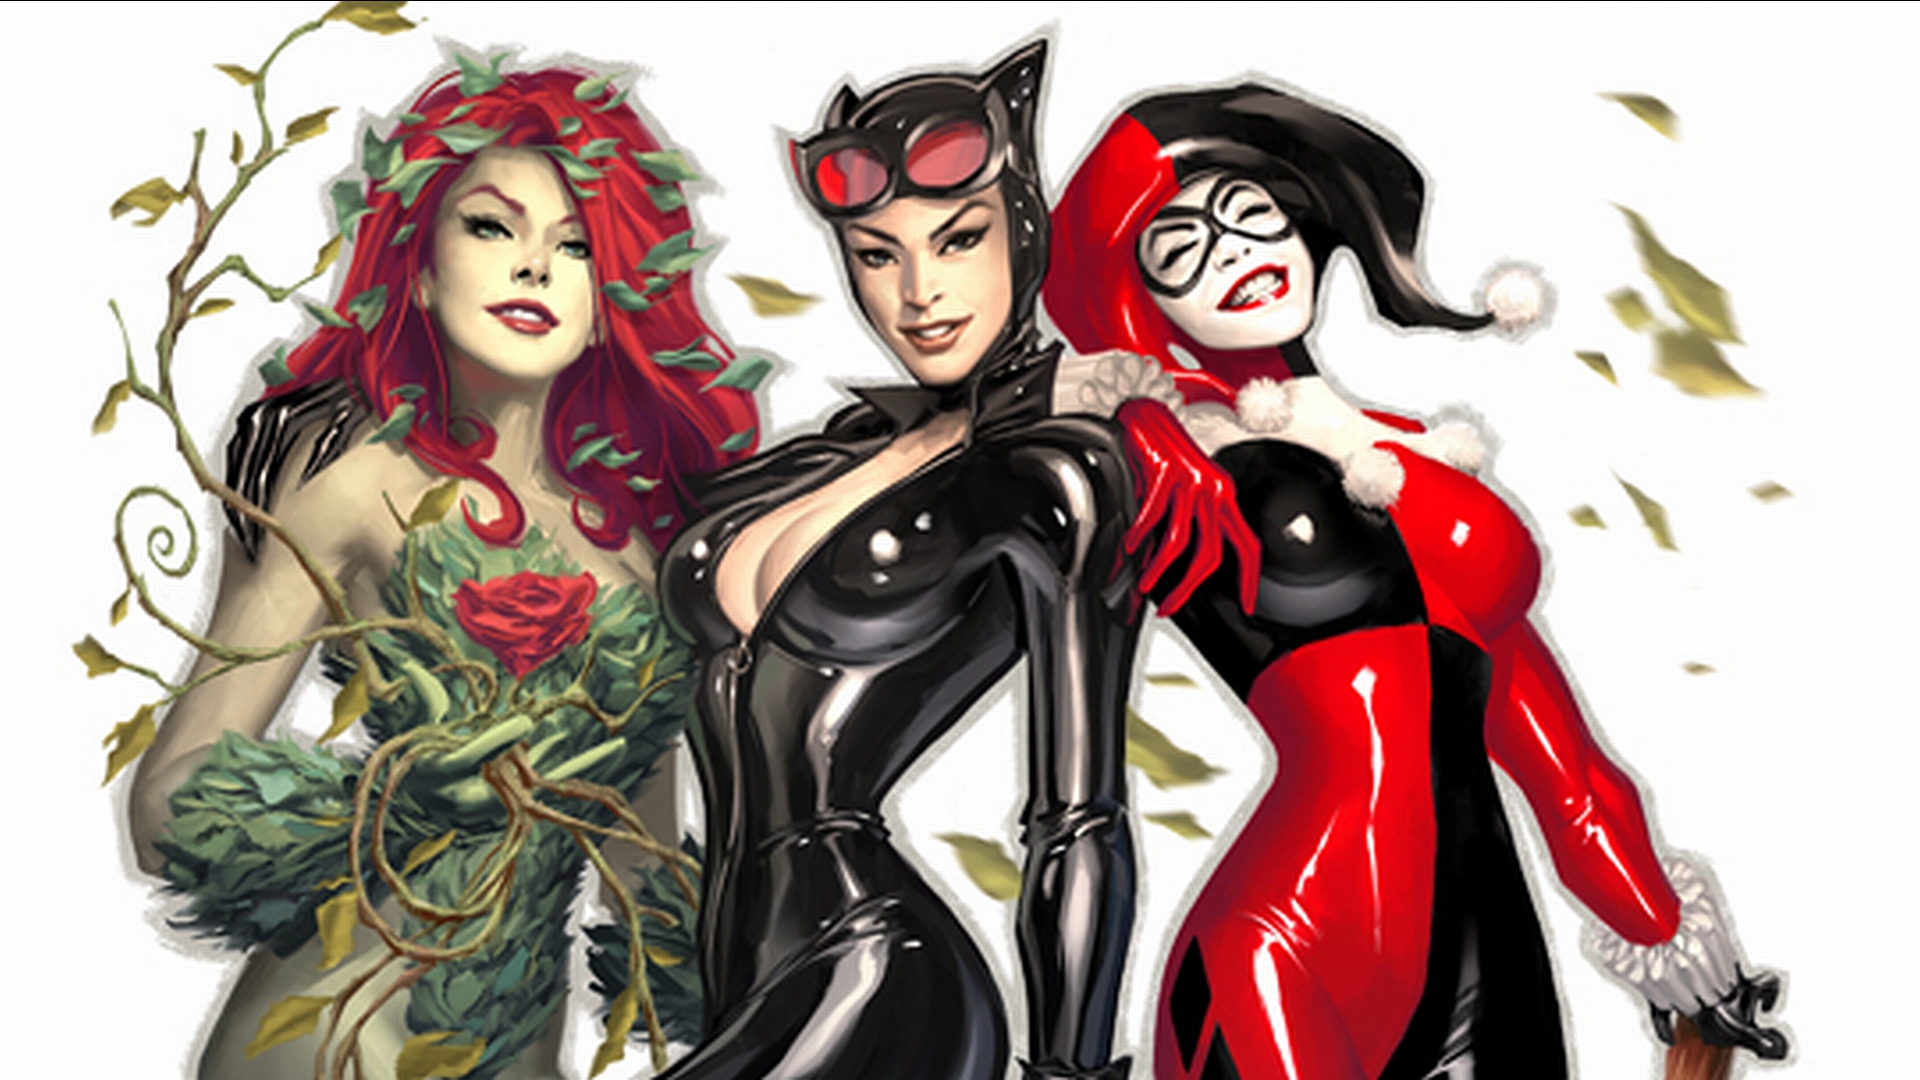 Gotham City Sirens: Harley Quinn and Poison Ivy unite in this striking comic-inspired desktop wallpaper.